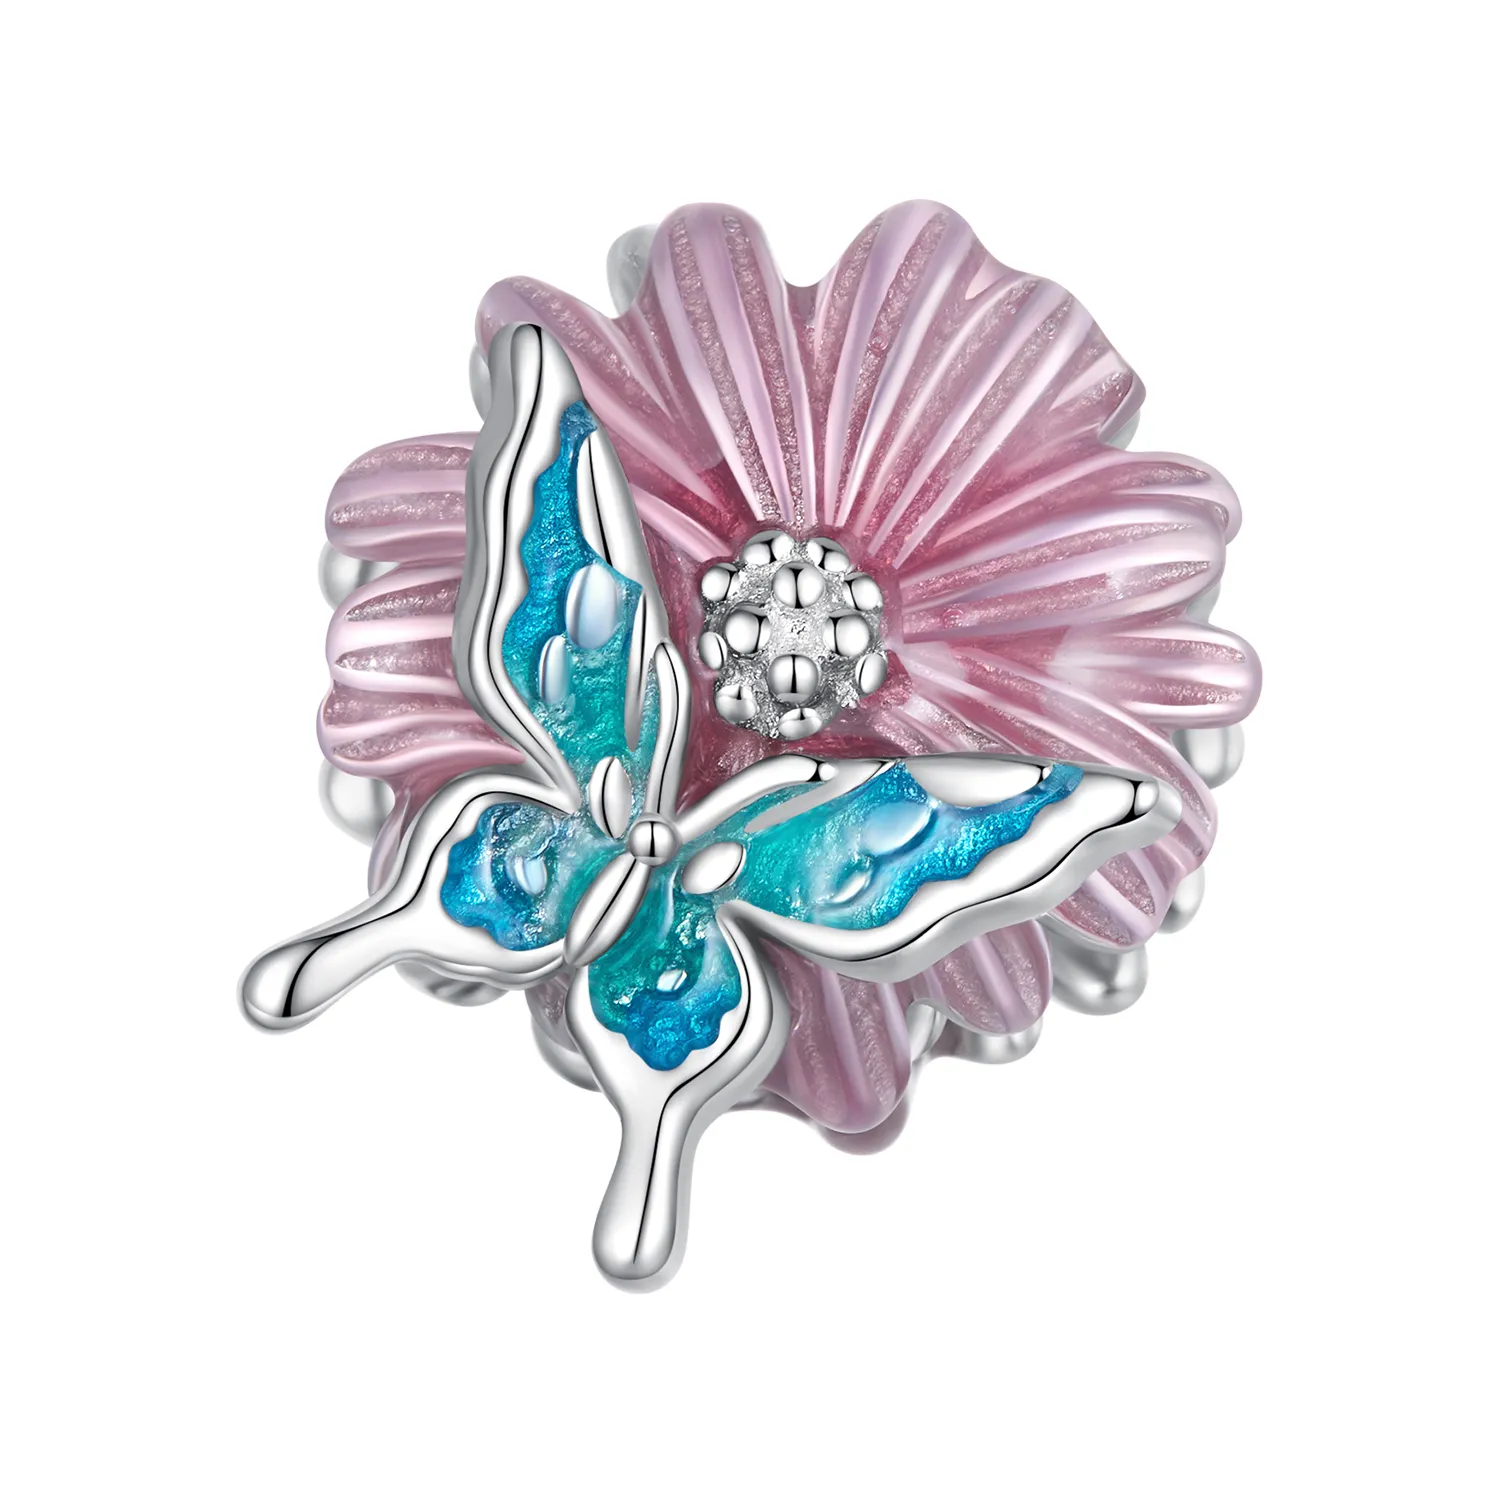 Pandora Style Butterfly Chrysanthemum Charm - BSC788